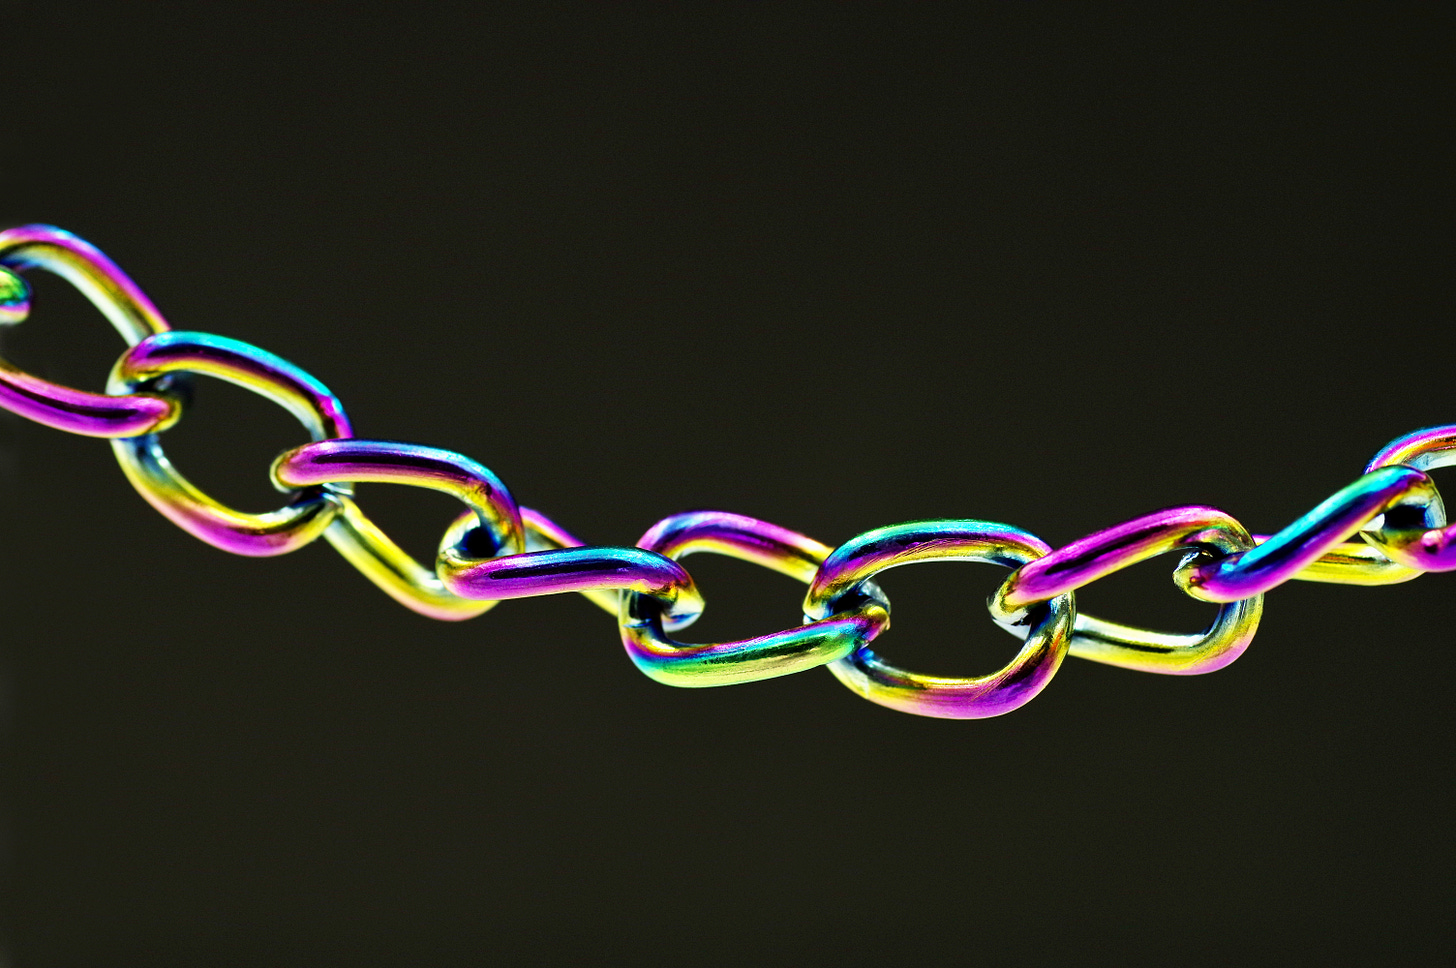 Rainbow-looking chain